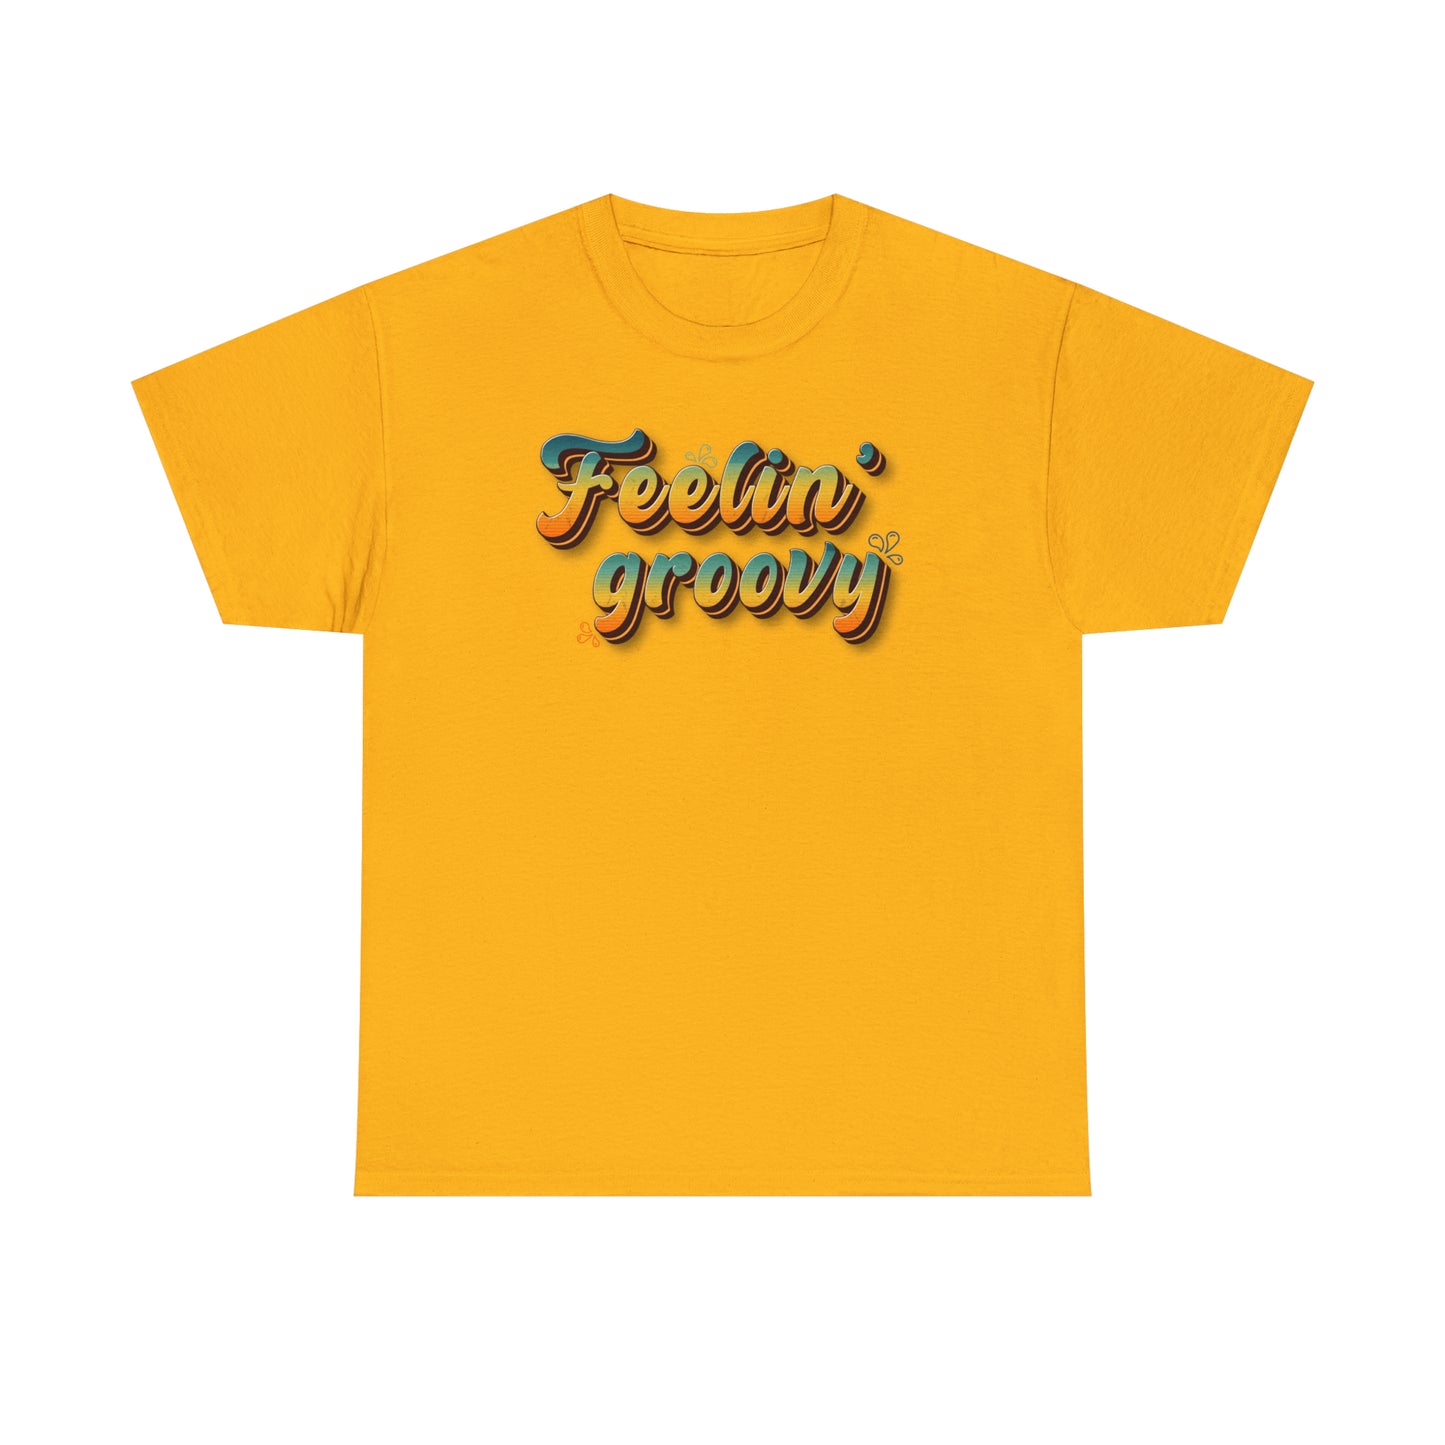 Groovy T-Shirt For Feeling Groovy Shirt For Seventies TShirt Retro 70's Vibe T Shirt For Retro Gift For Seventies Party Shirt Groovy Gift